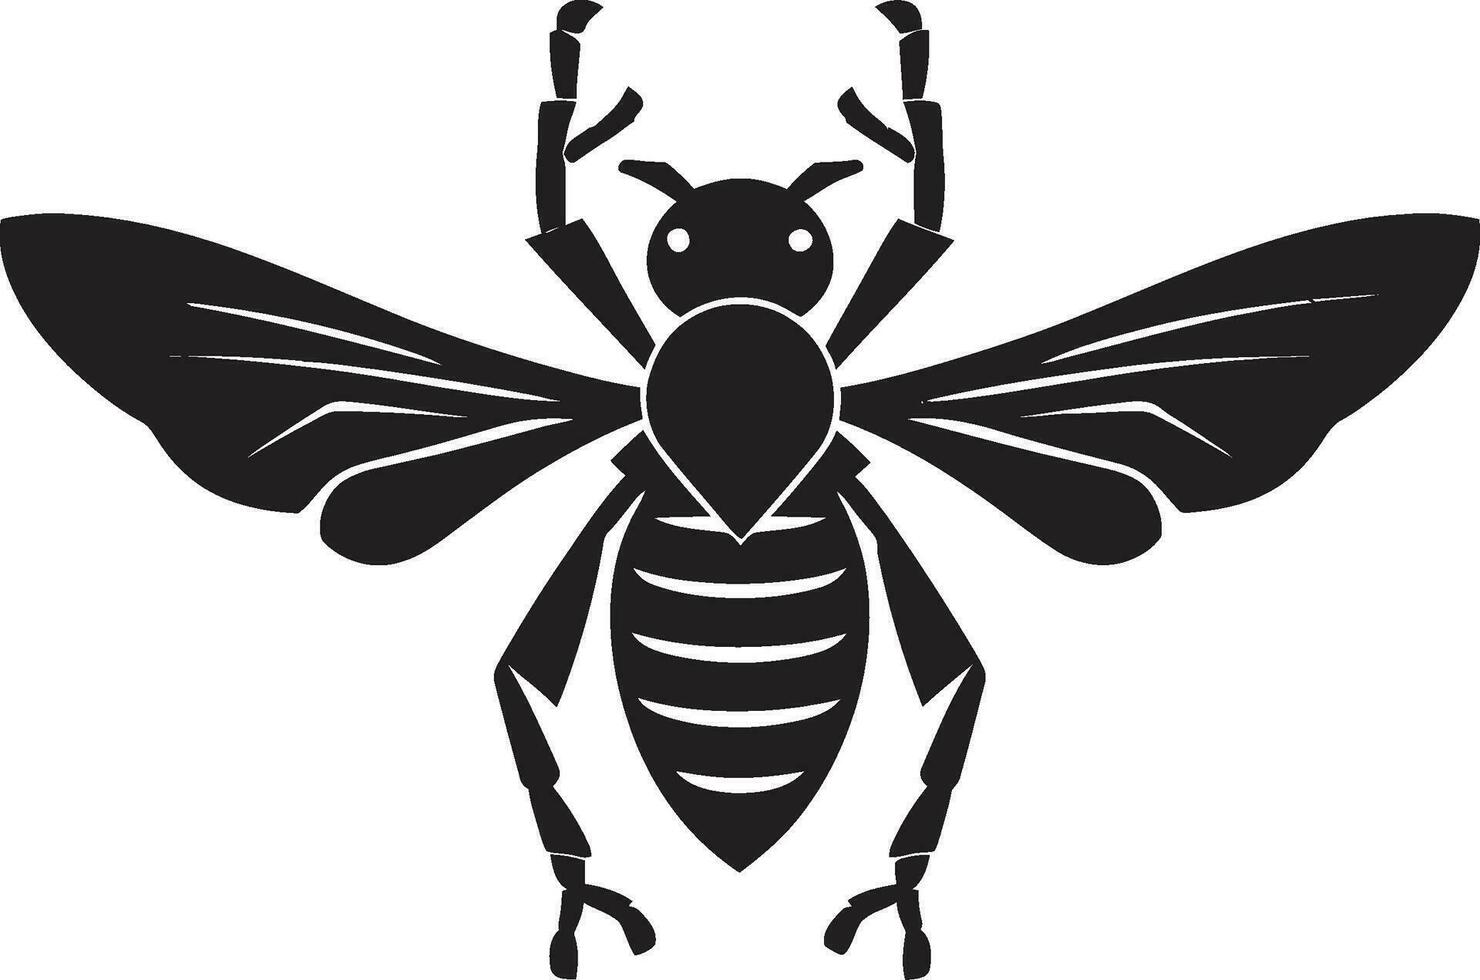 Venomous Wasp Sovereignty Symbol Elegant Sting of the Night Emblem vector